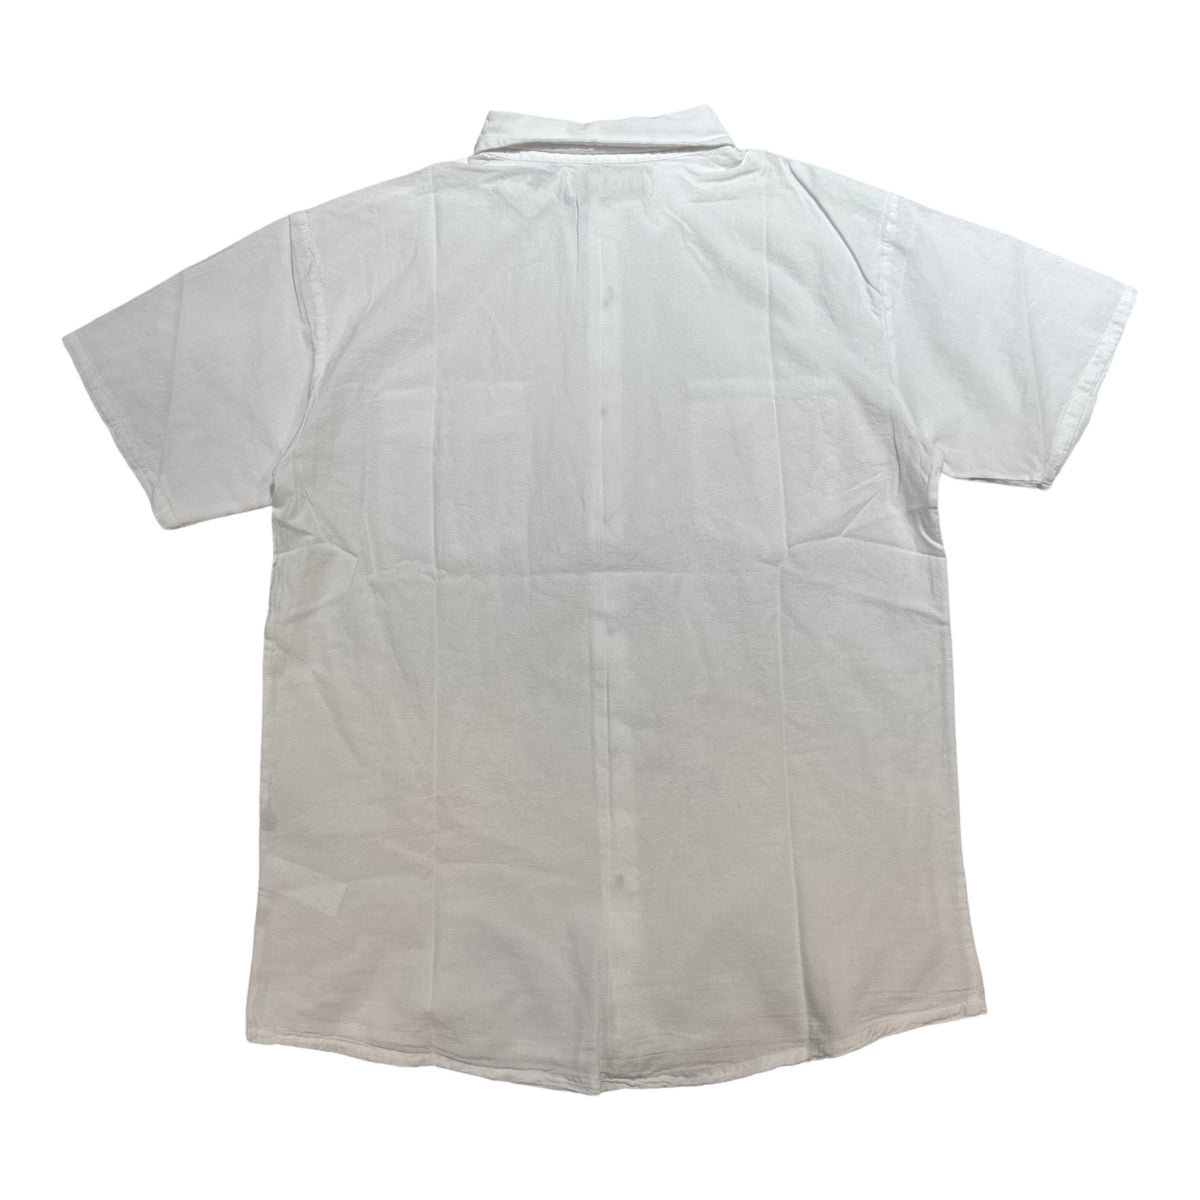 Seaspice White Double Pocket Peruvian Cotton Short Sleeve Shirt - Dudes Boutique